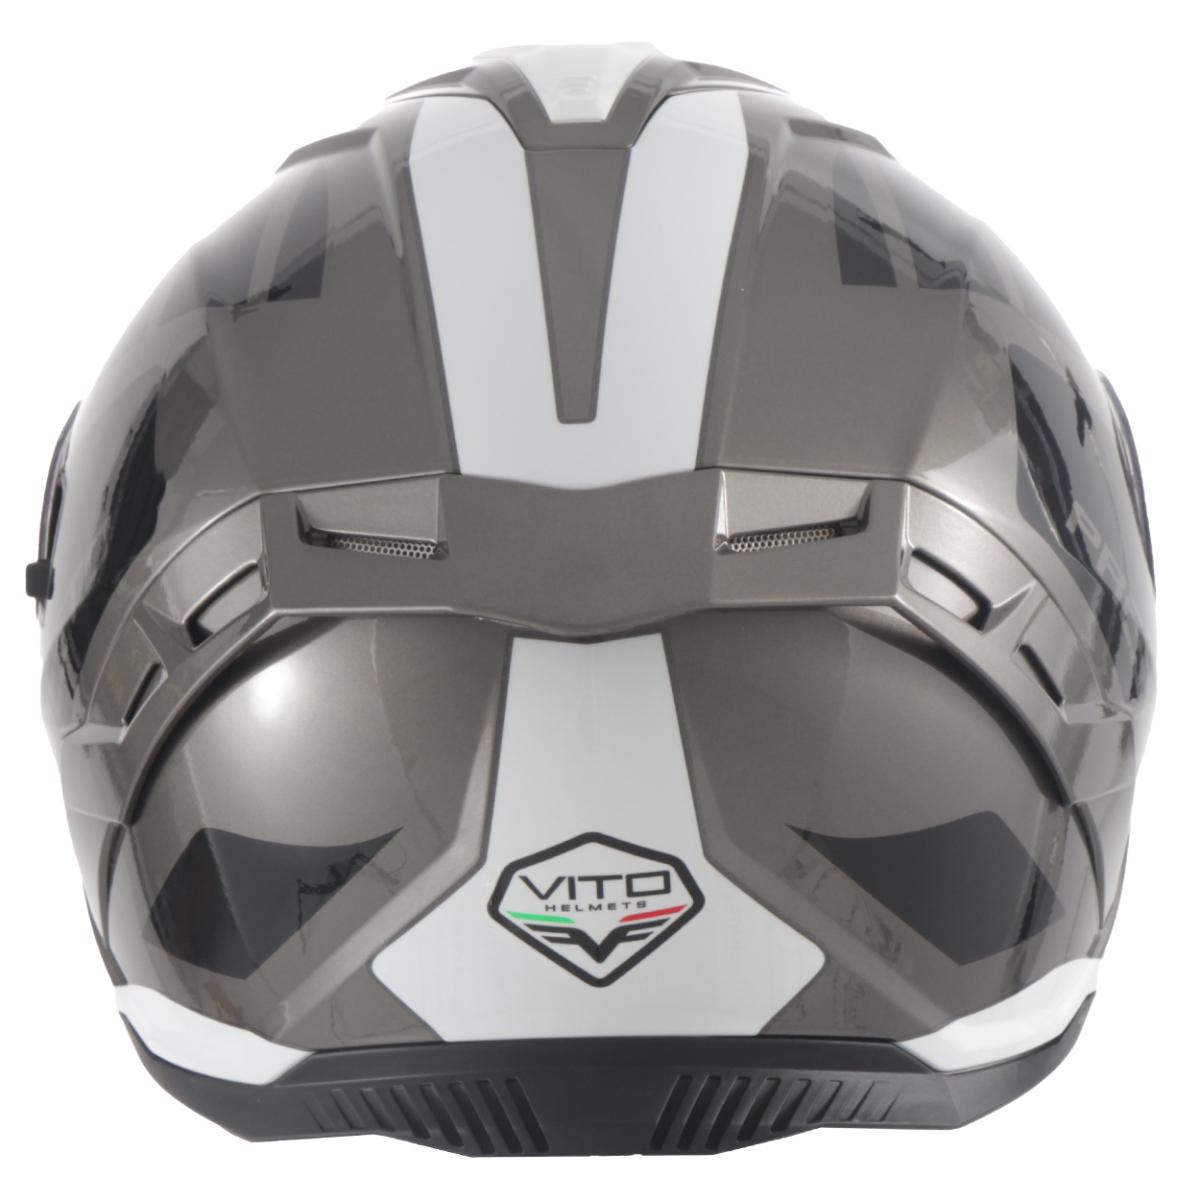 Casco Moto Integral Vito Presto Visera Solar Gris/Negro Brillante - URA Moto